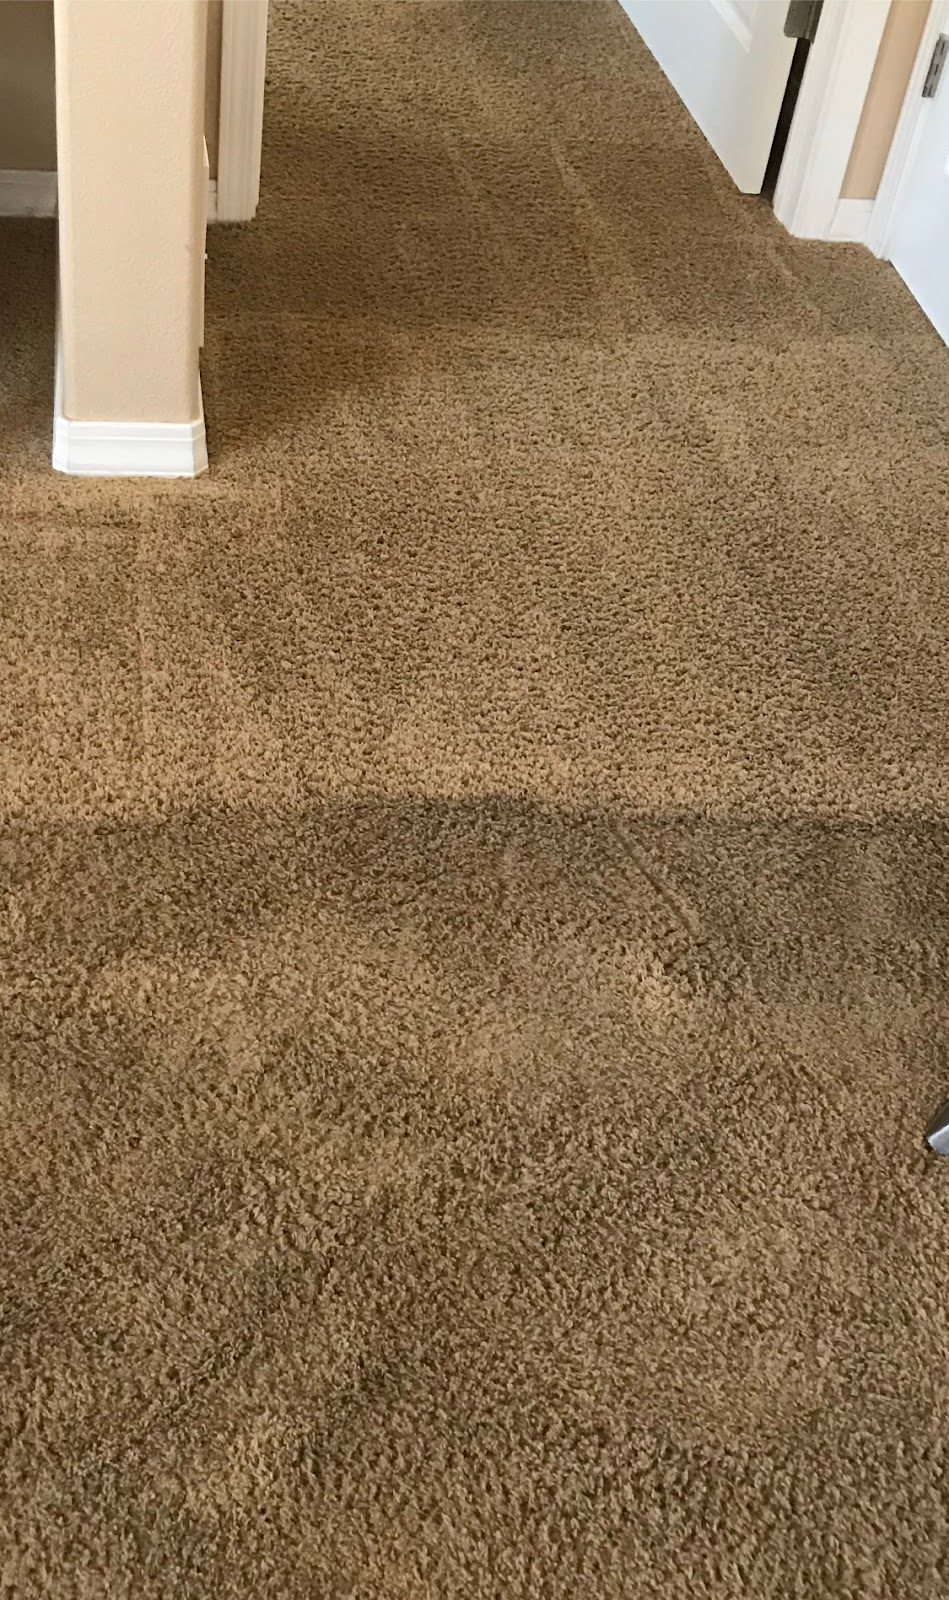 First Choice Carpet Cleaning Llc